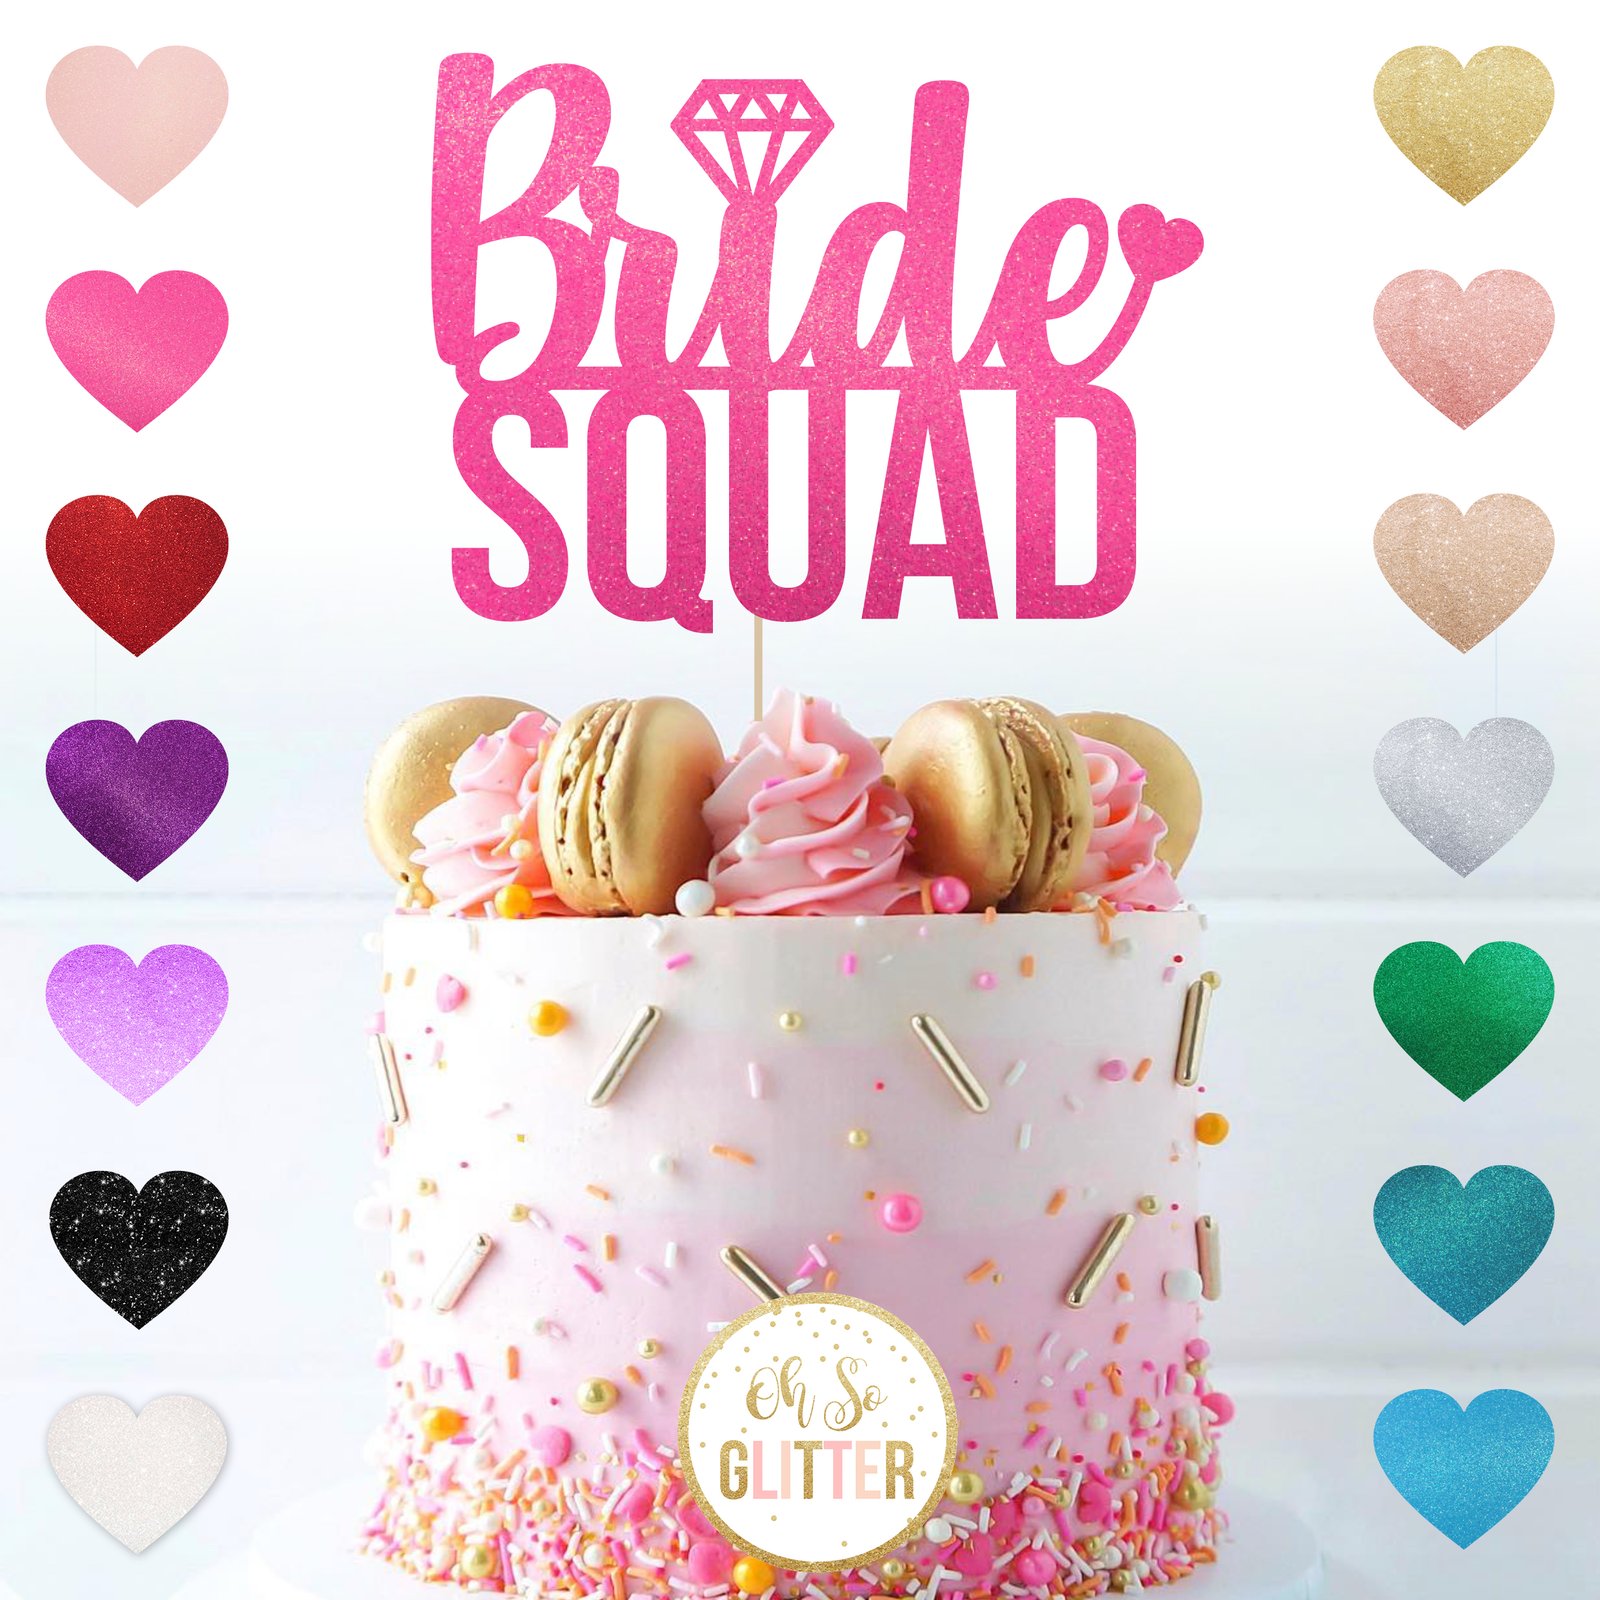 The Seaside Squad birthday cake | Birthday cake, Cake, Desserts